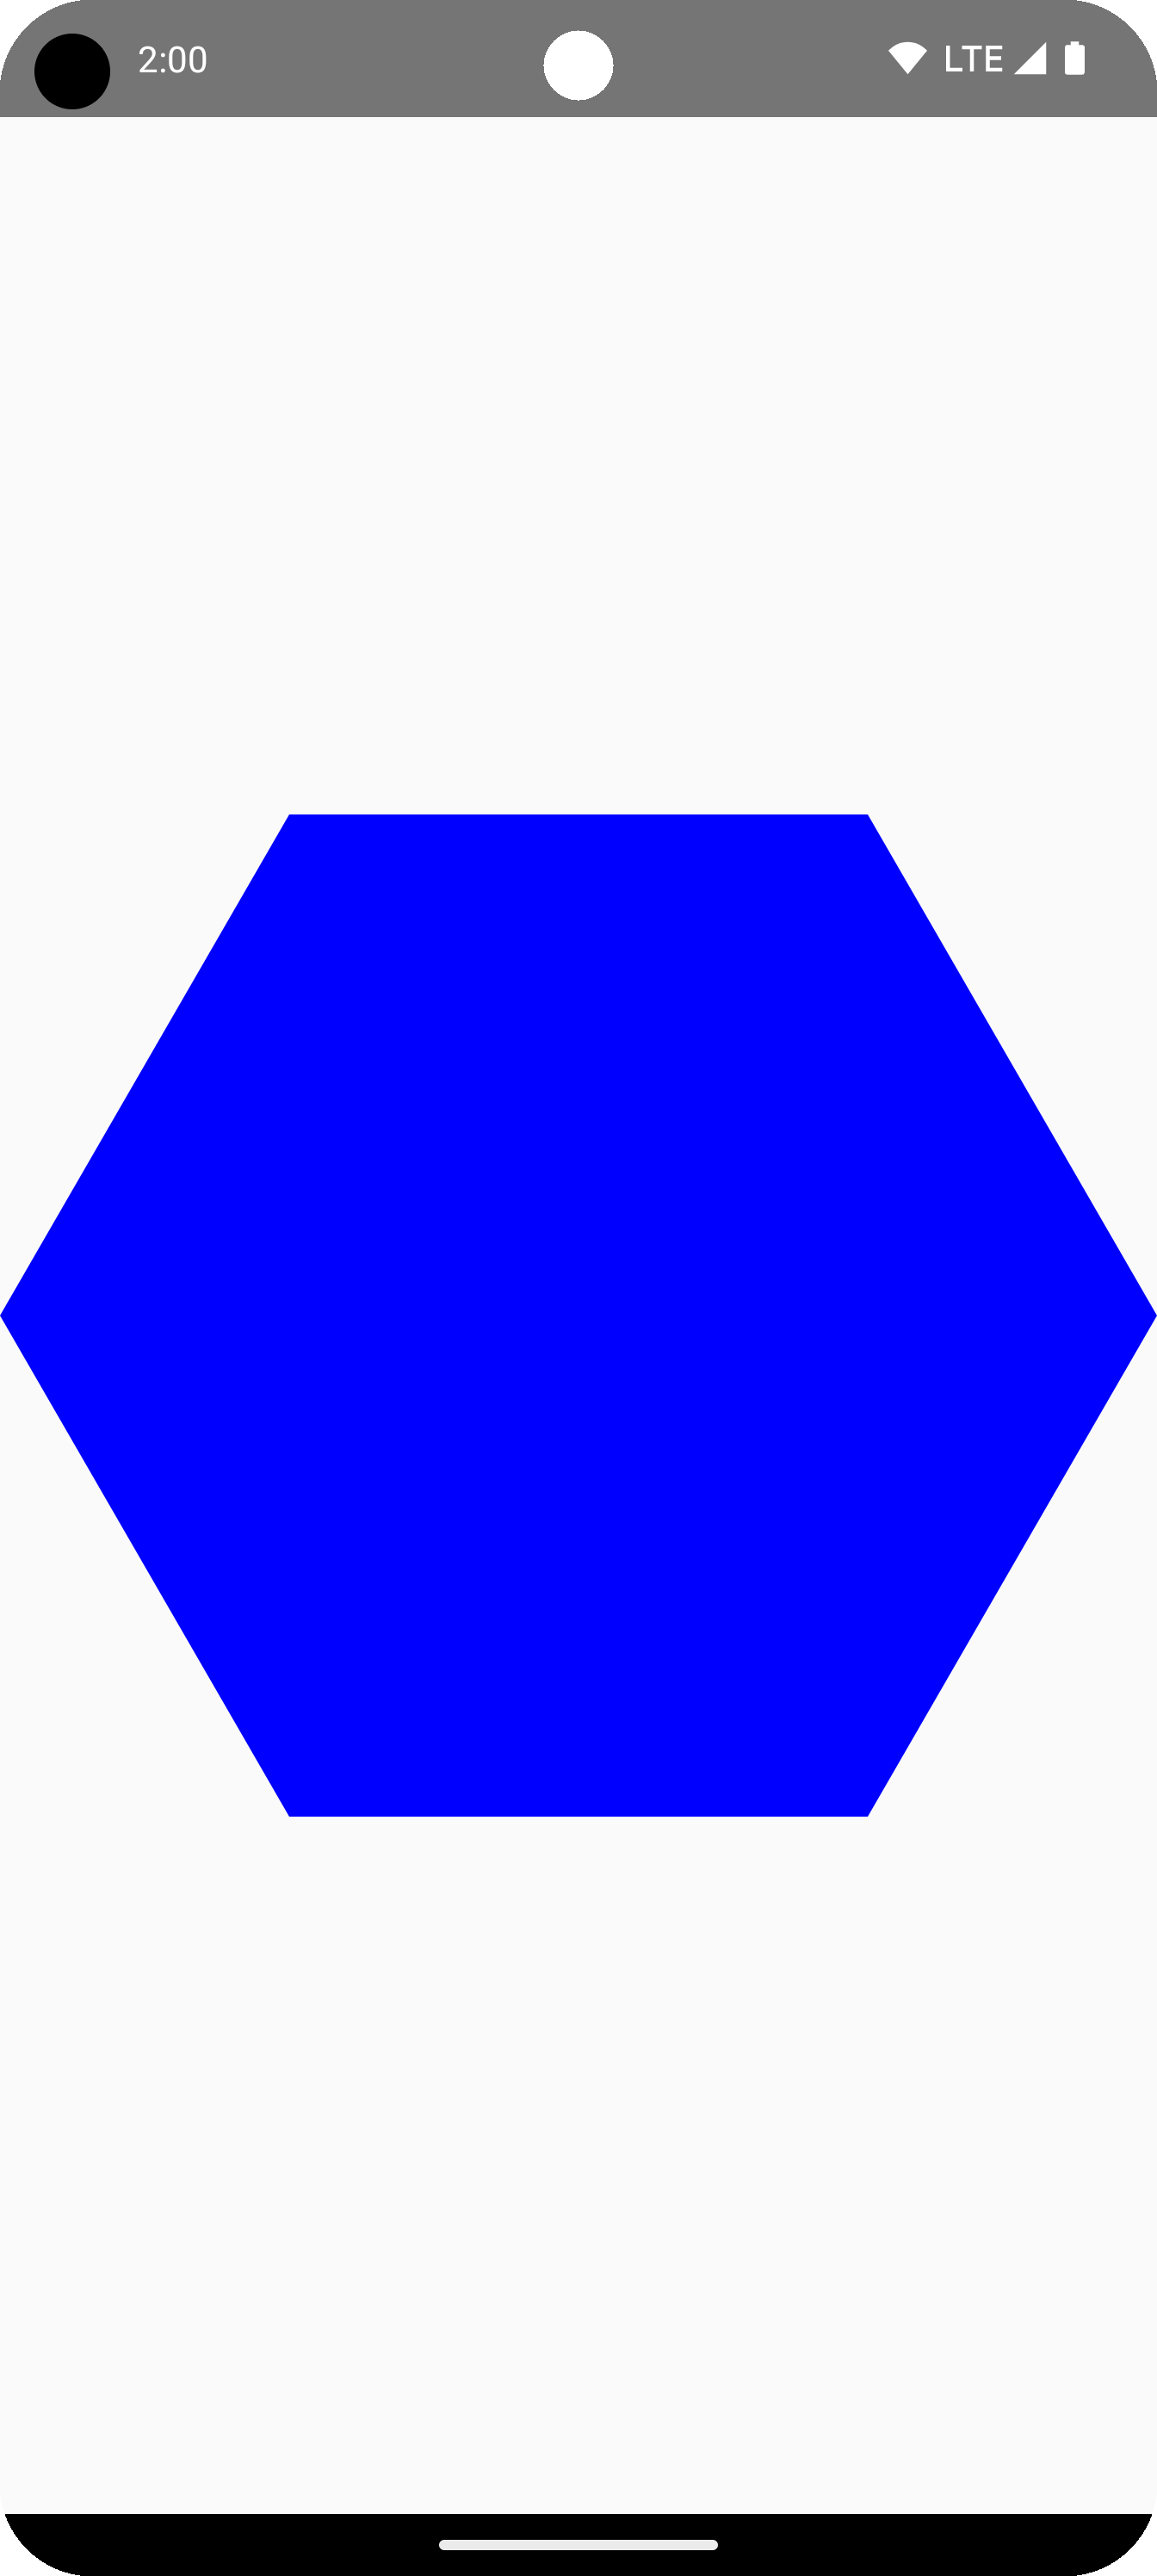 Heksagon biru di tengah area gambar